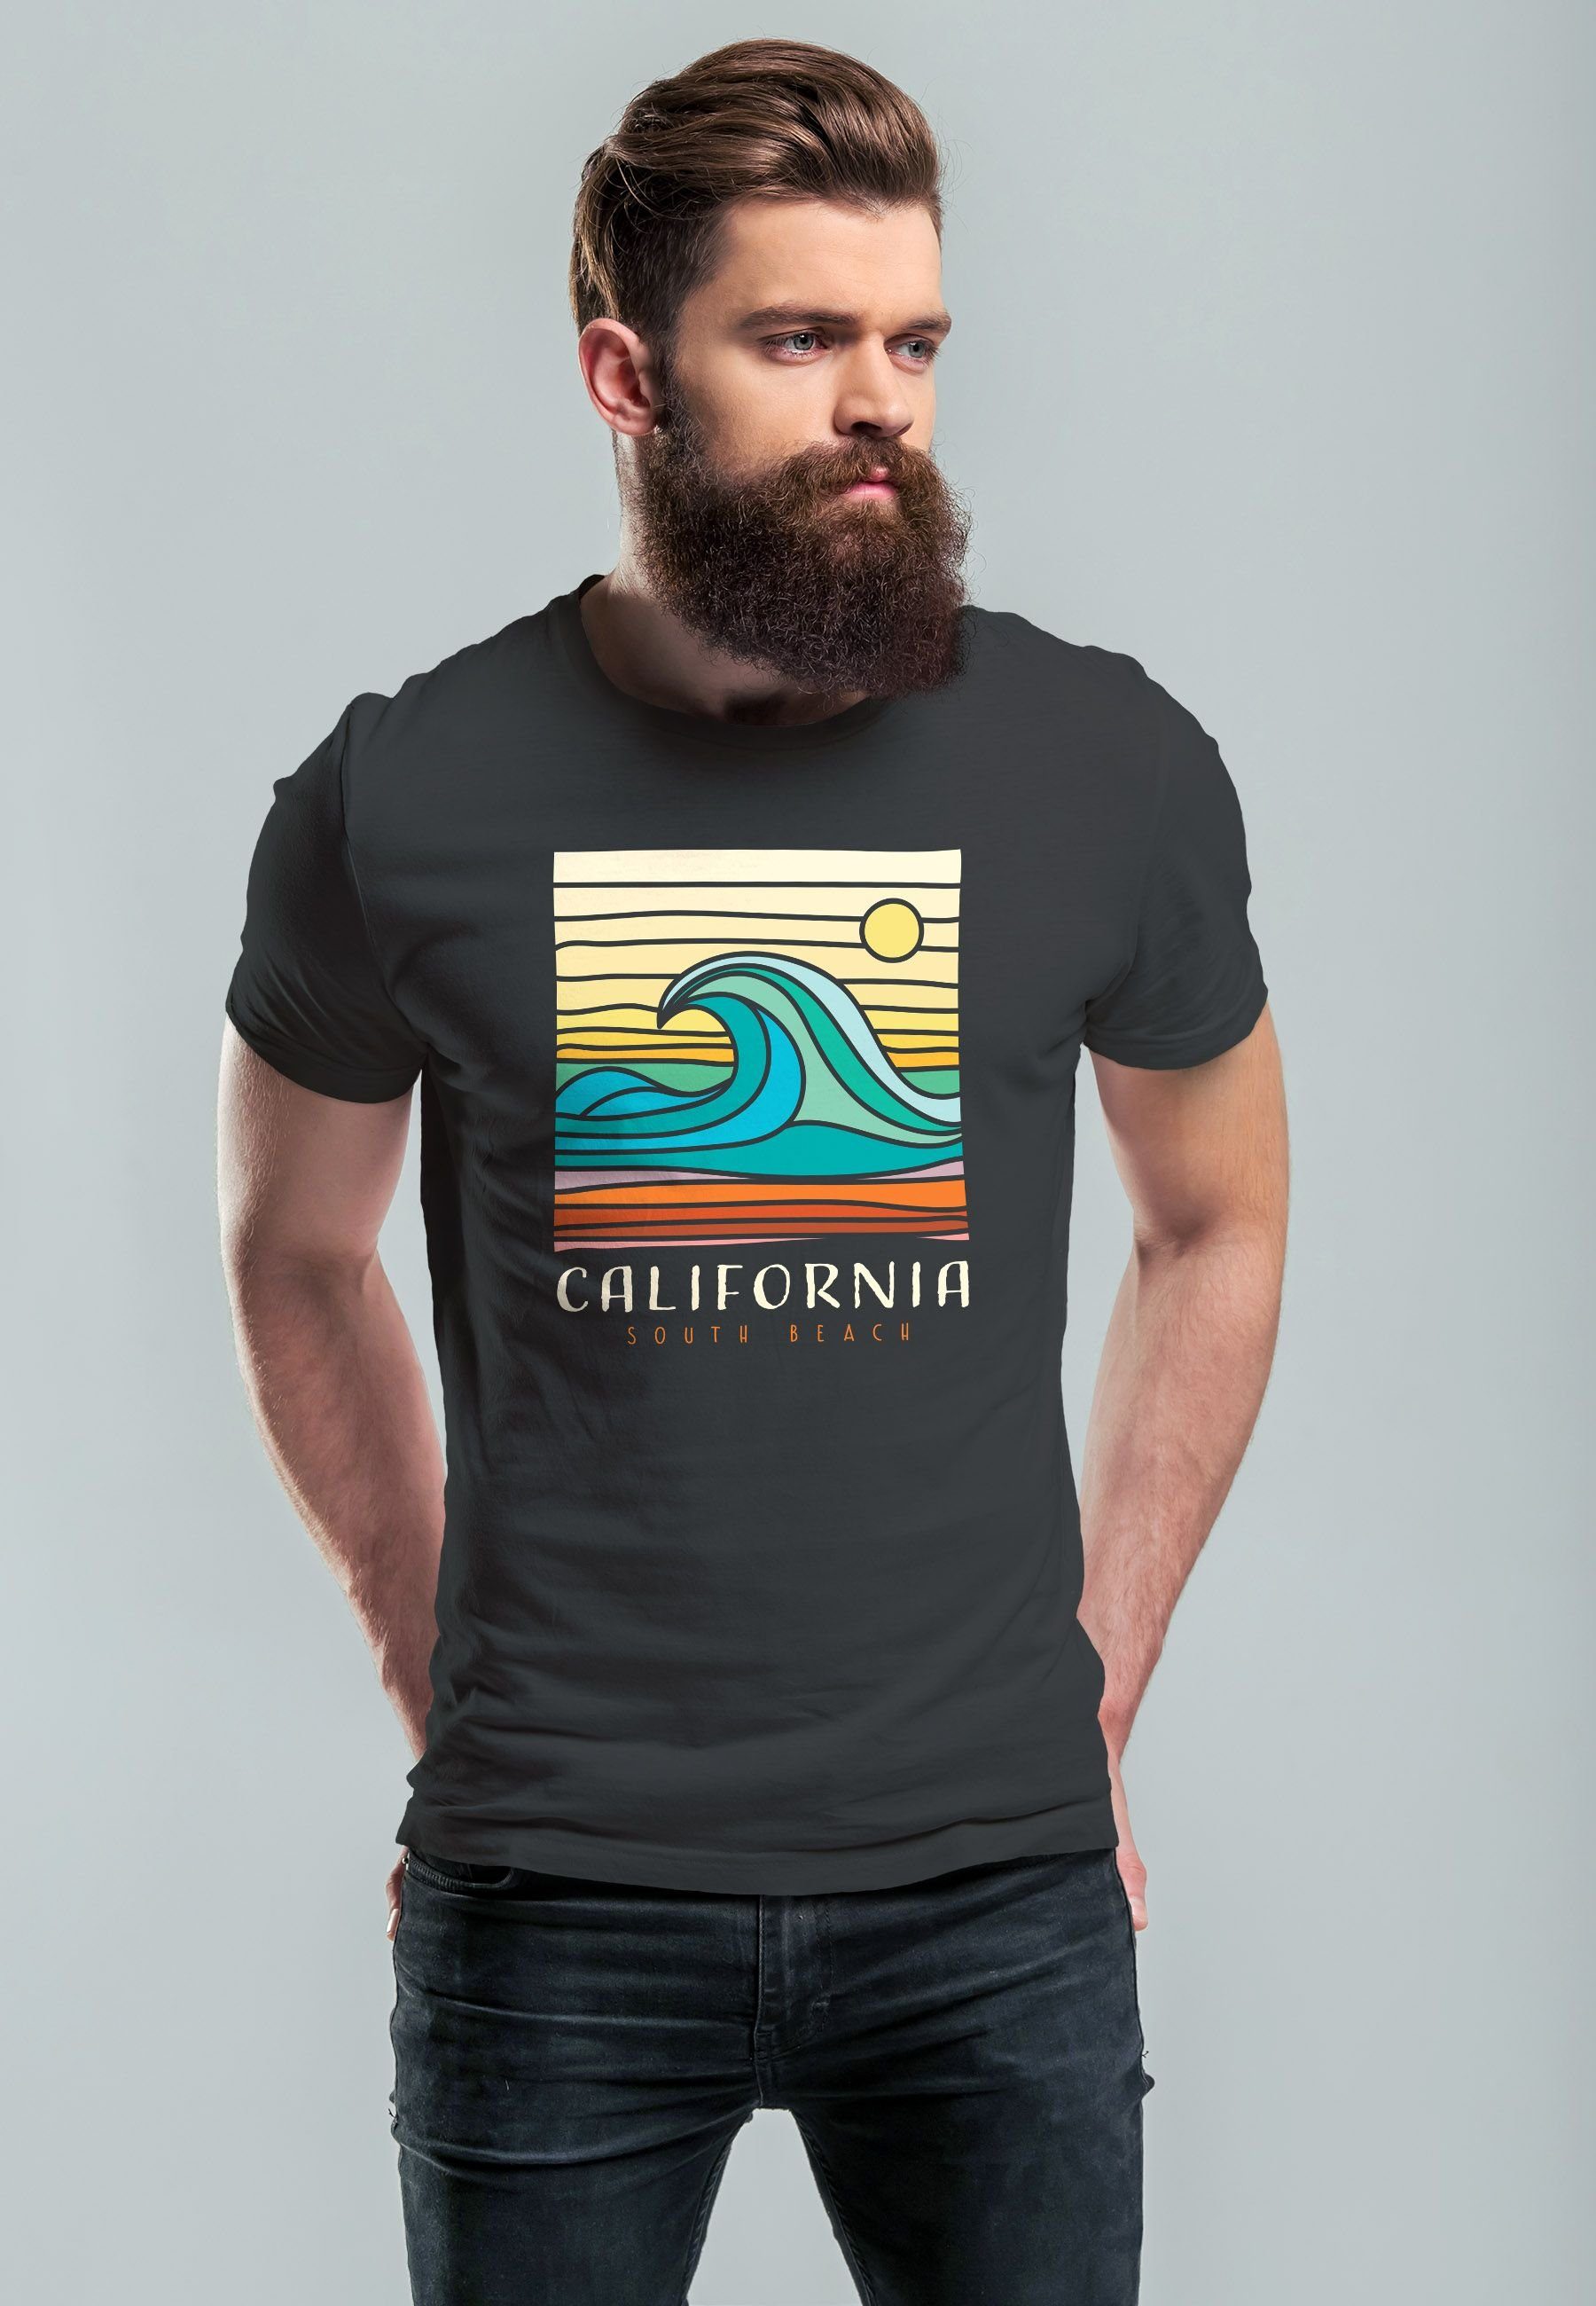 T-Shirt Aufdruc Print Herren Welle South Neverless Print-Shirt Wave anthrazit Surfing California Print Beach mit